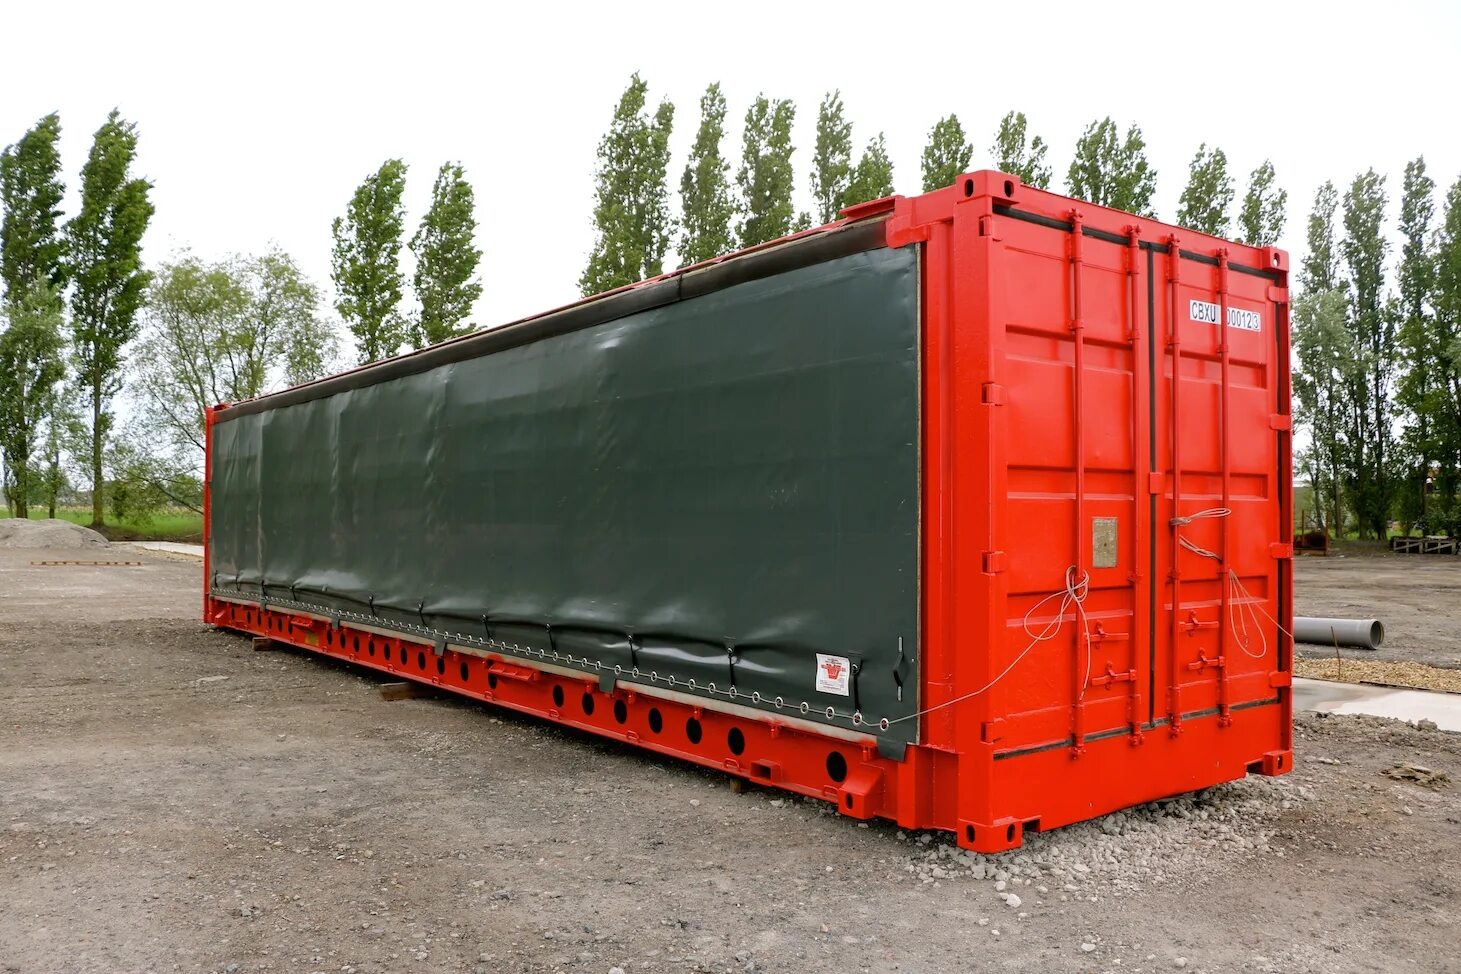 45 Ft контейнер. 45ft Container. Container 45ft Trailer. Морской контейнер 45 футов с боковыми тентами. Морской контейнер 45